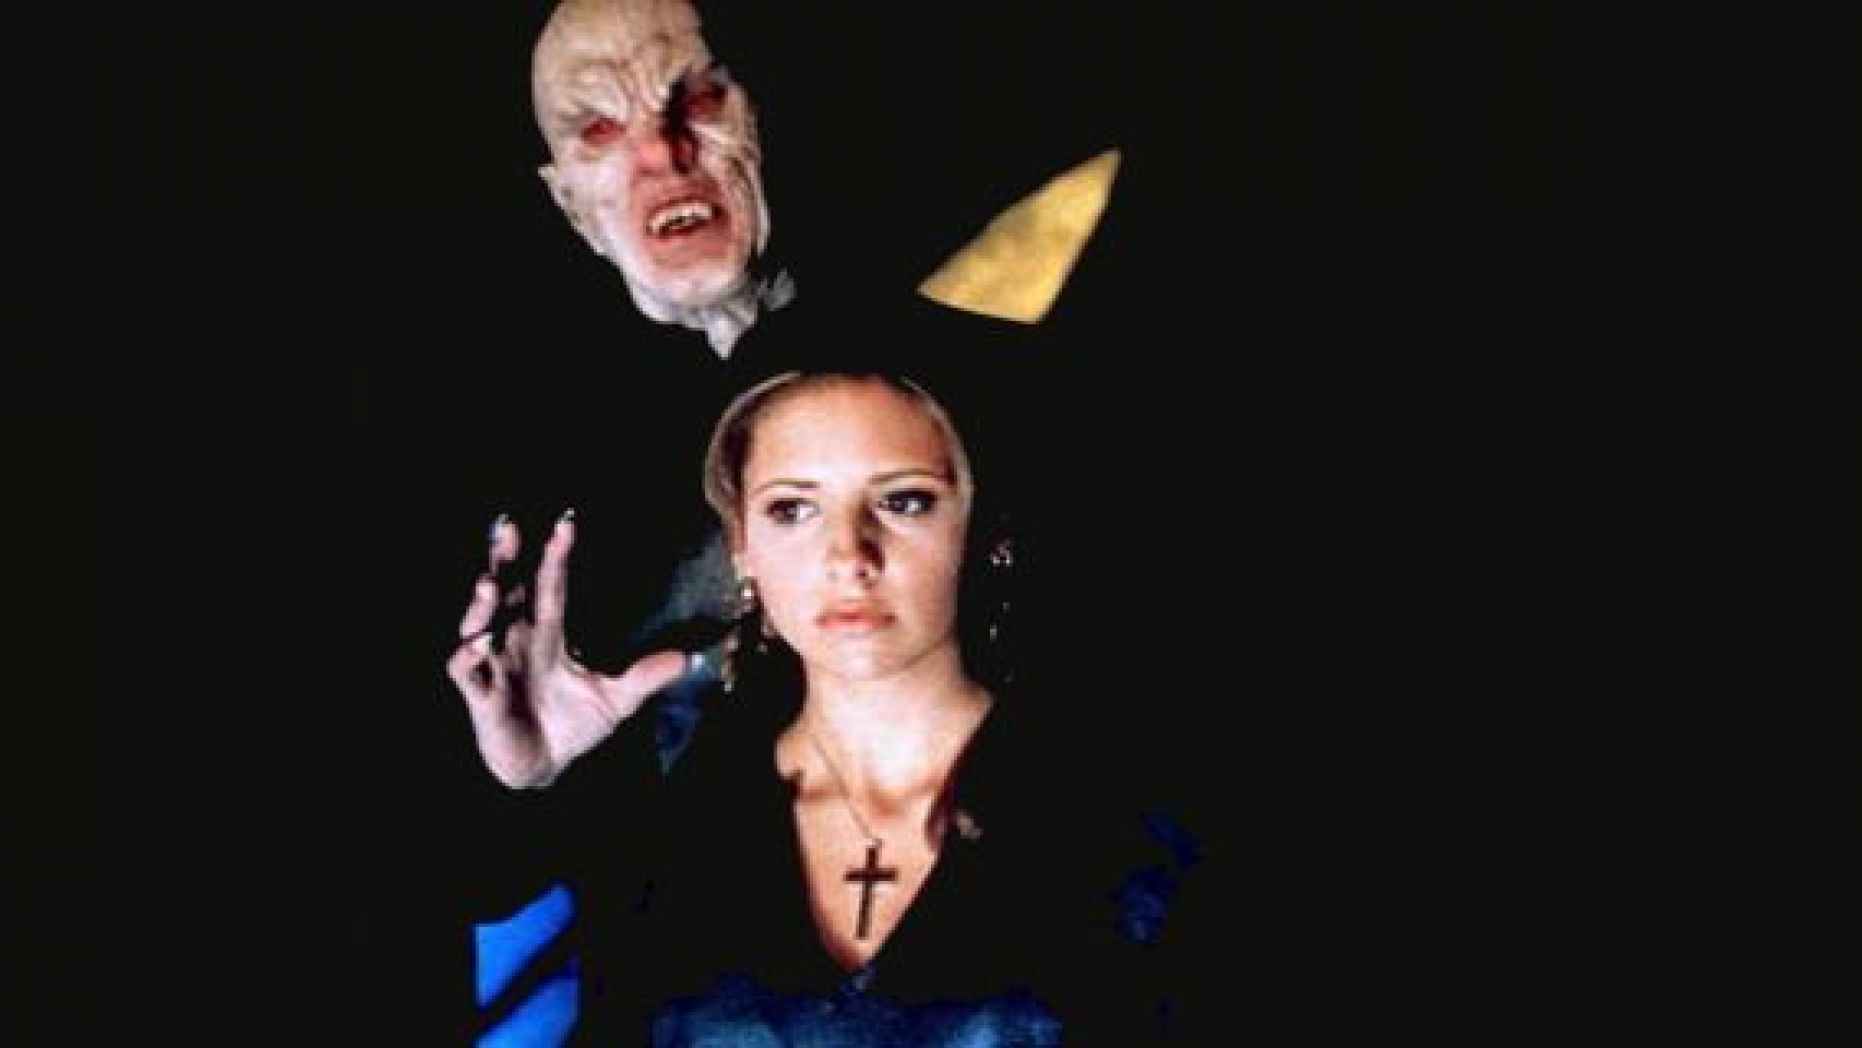 Buffy - L'ammazzavampiri